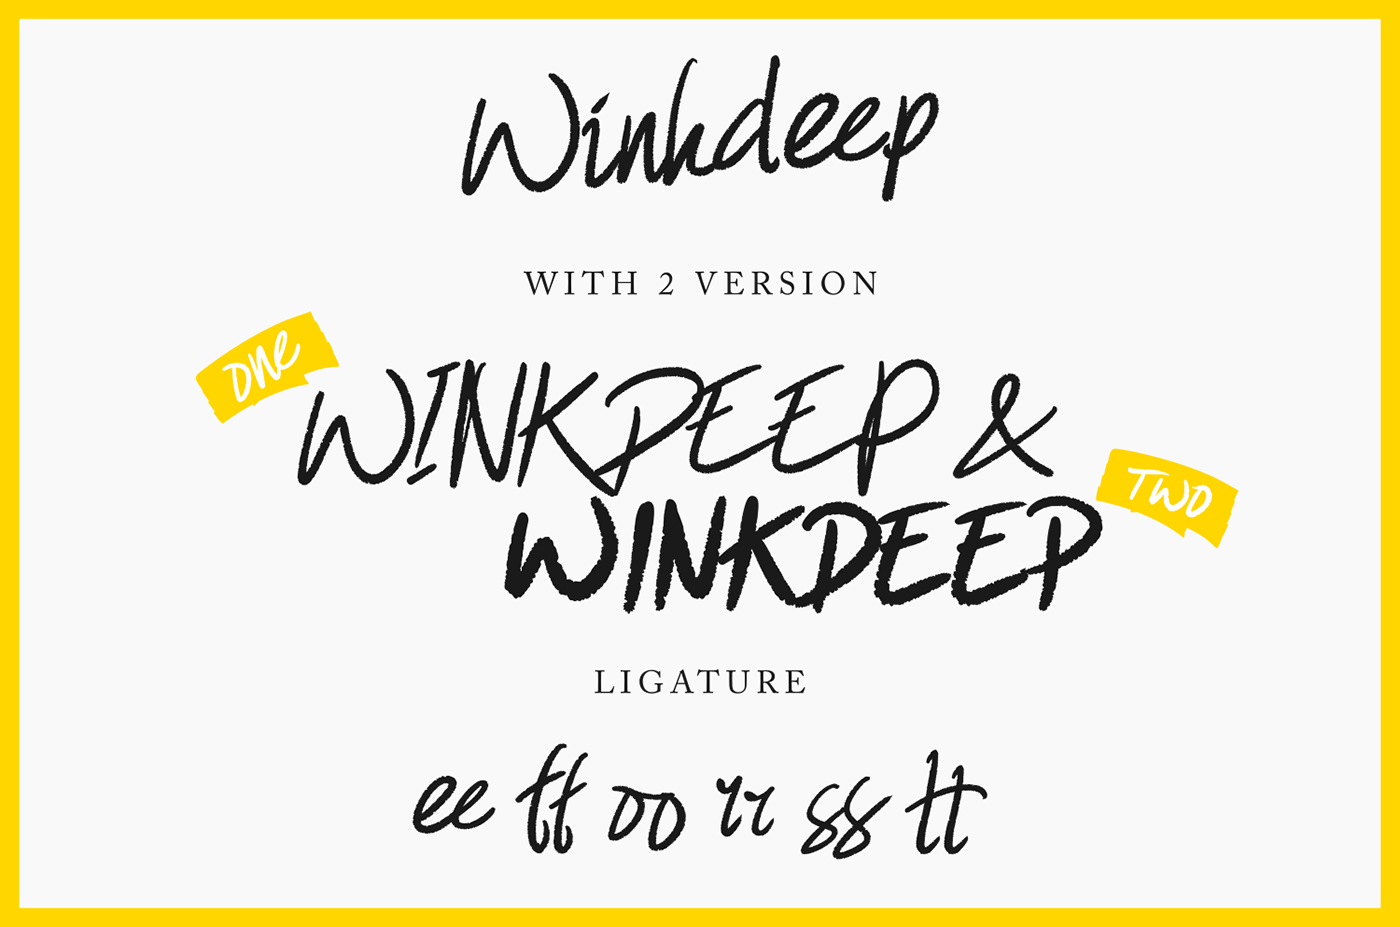 Winkdeep